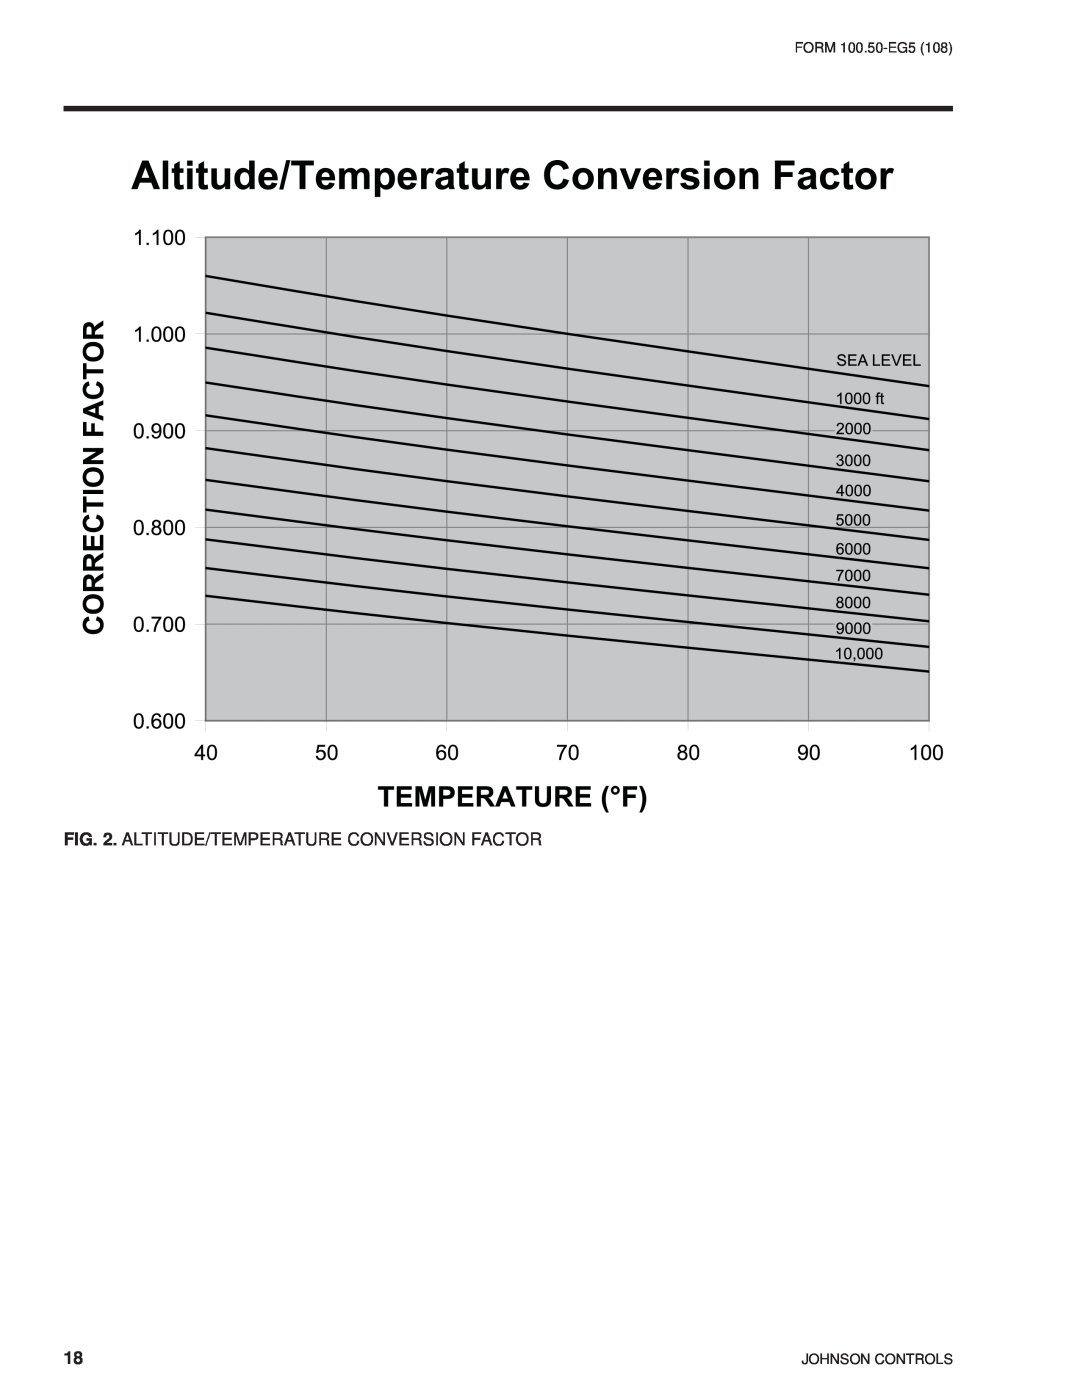 York HFC-410A manual Altitude/Temperature Conversion Factor, FORM 100.50-EG5108, Johnson Controls 